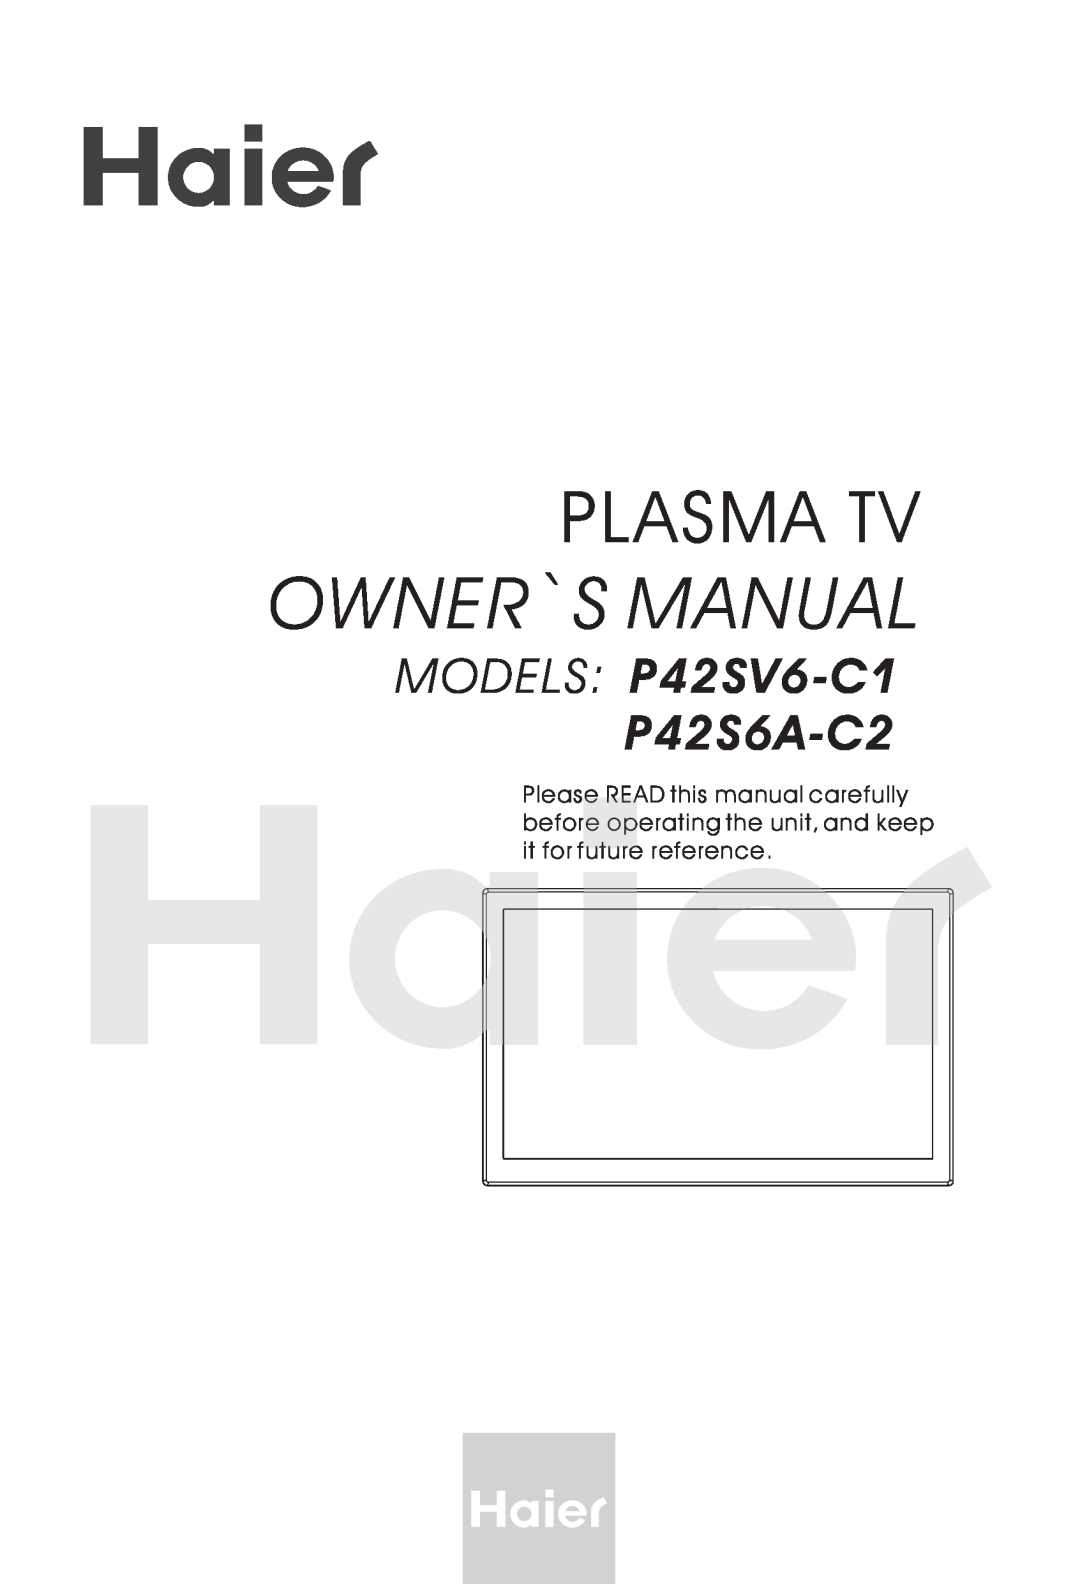 Haier owner manual Plasma Tv Owner`S Manual, MODELS P42SV6-C1 P42S6A-C2 